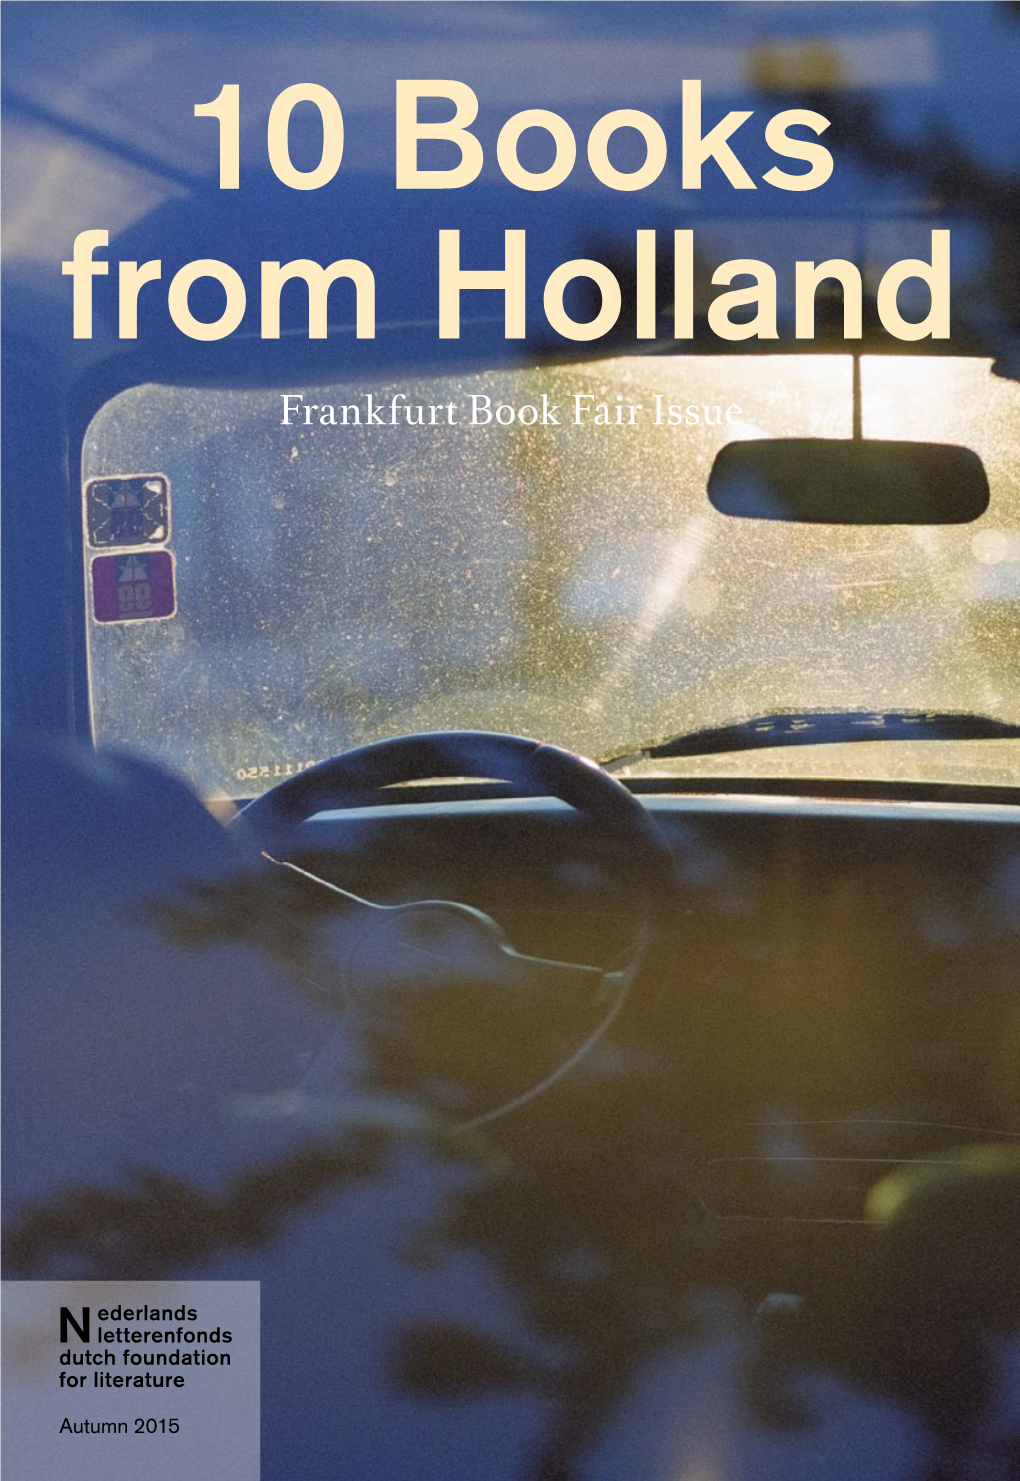 10 Books from Holland Frankfurt Book Fair Issue